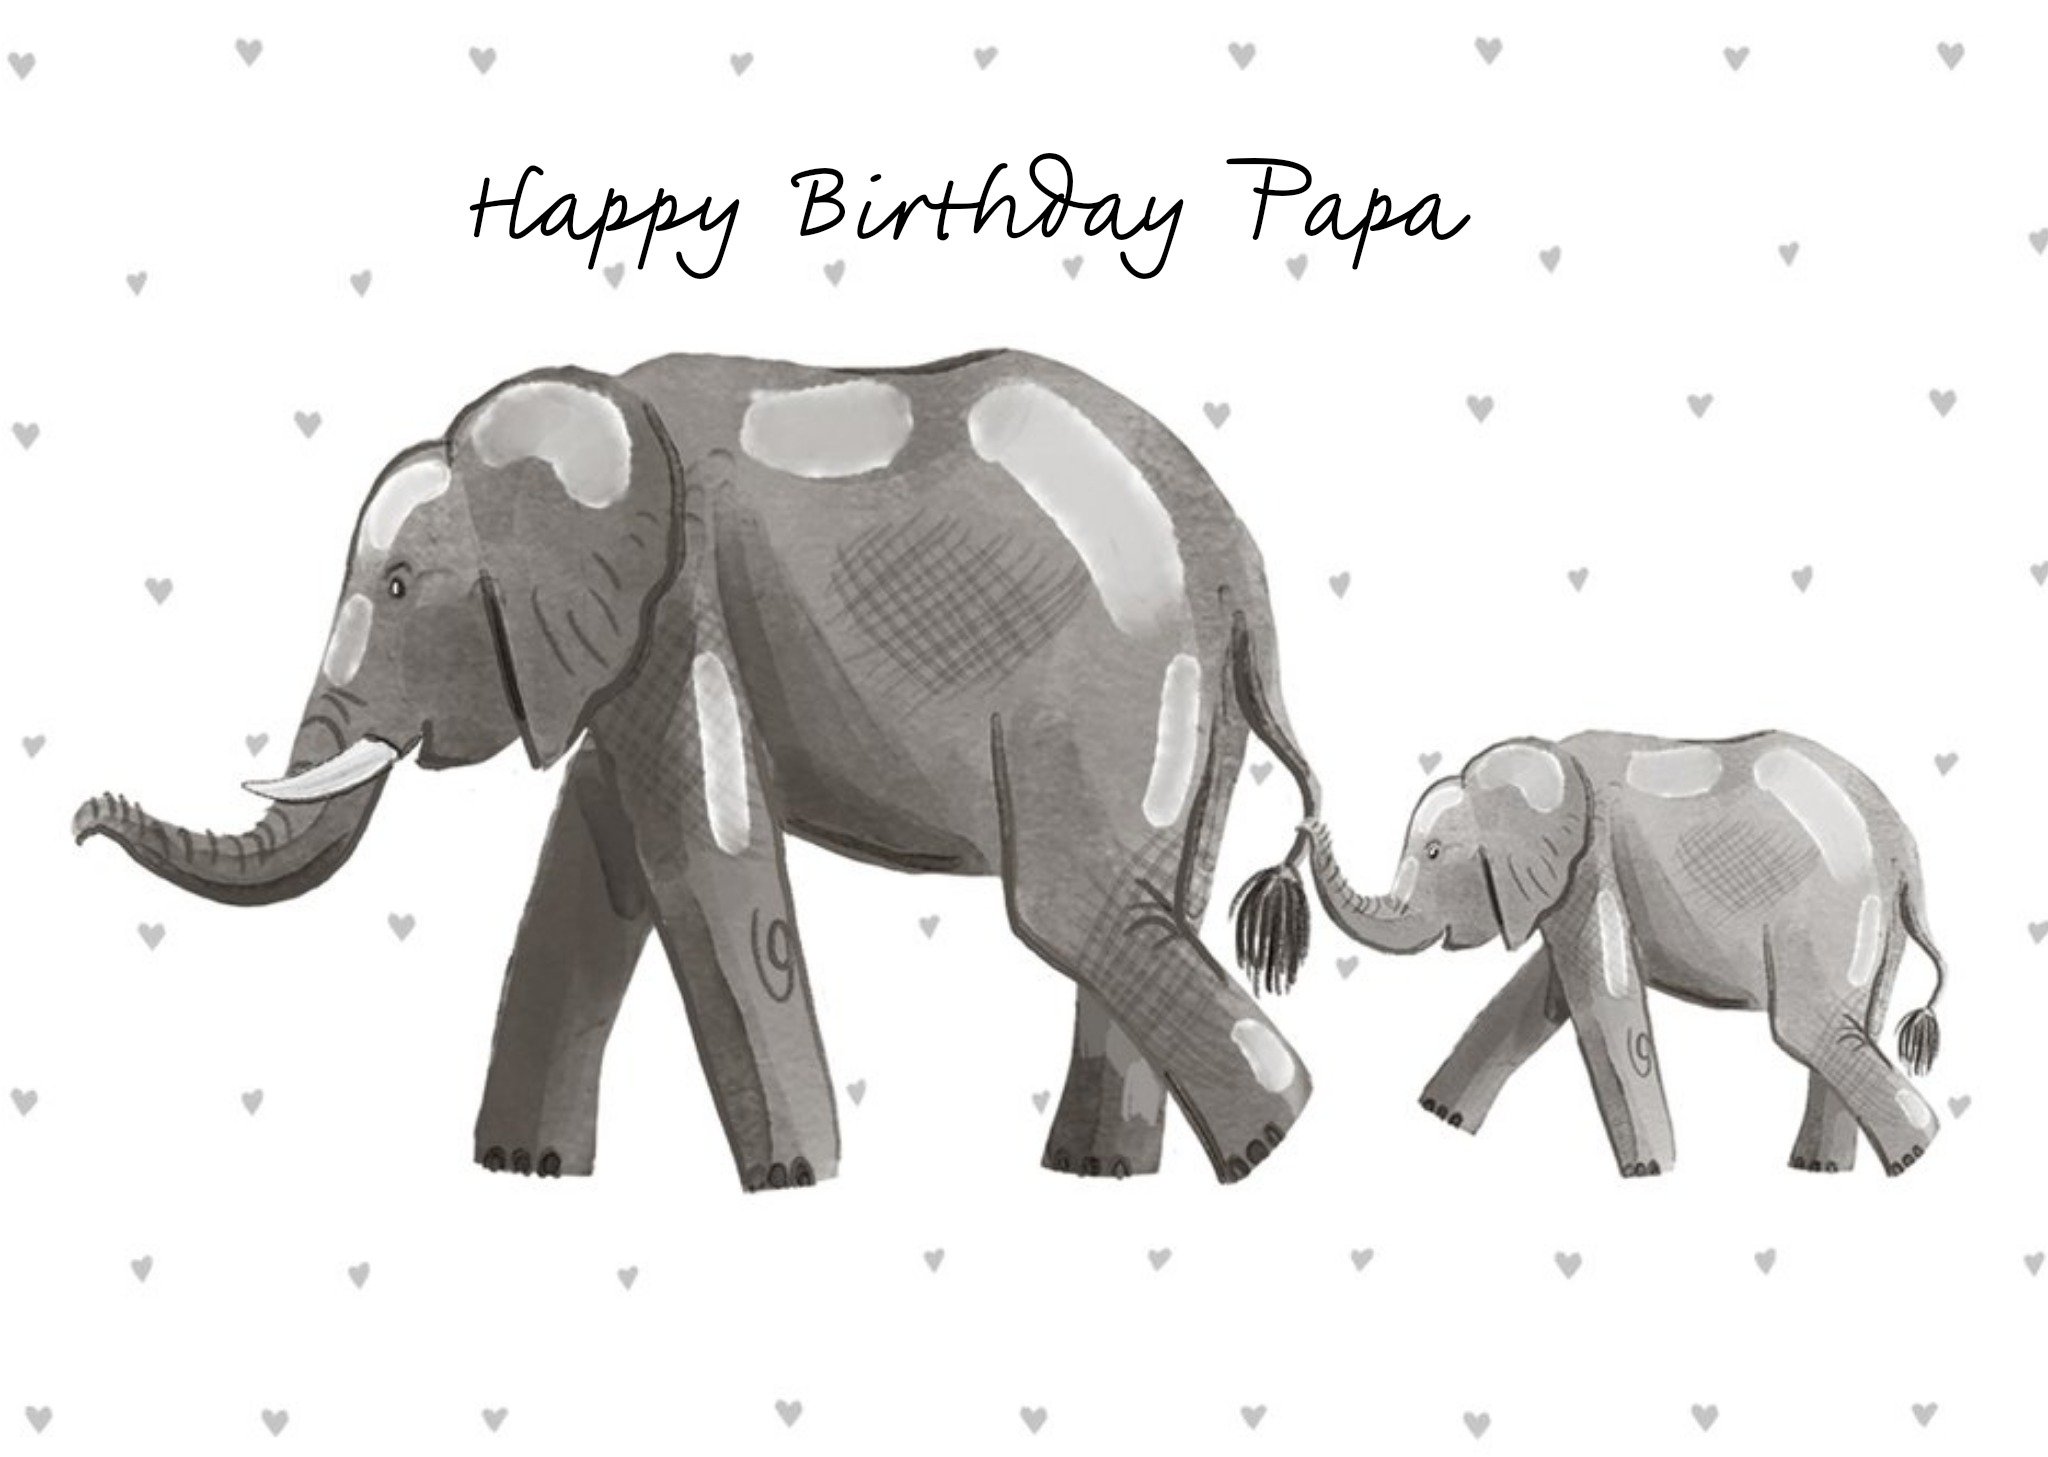 Moonpig Okey Dokey Design Cute Illustrated Father & Son Elephant Birthday Card, Large